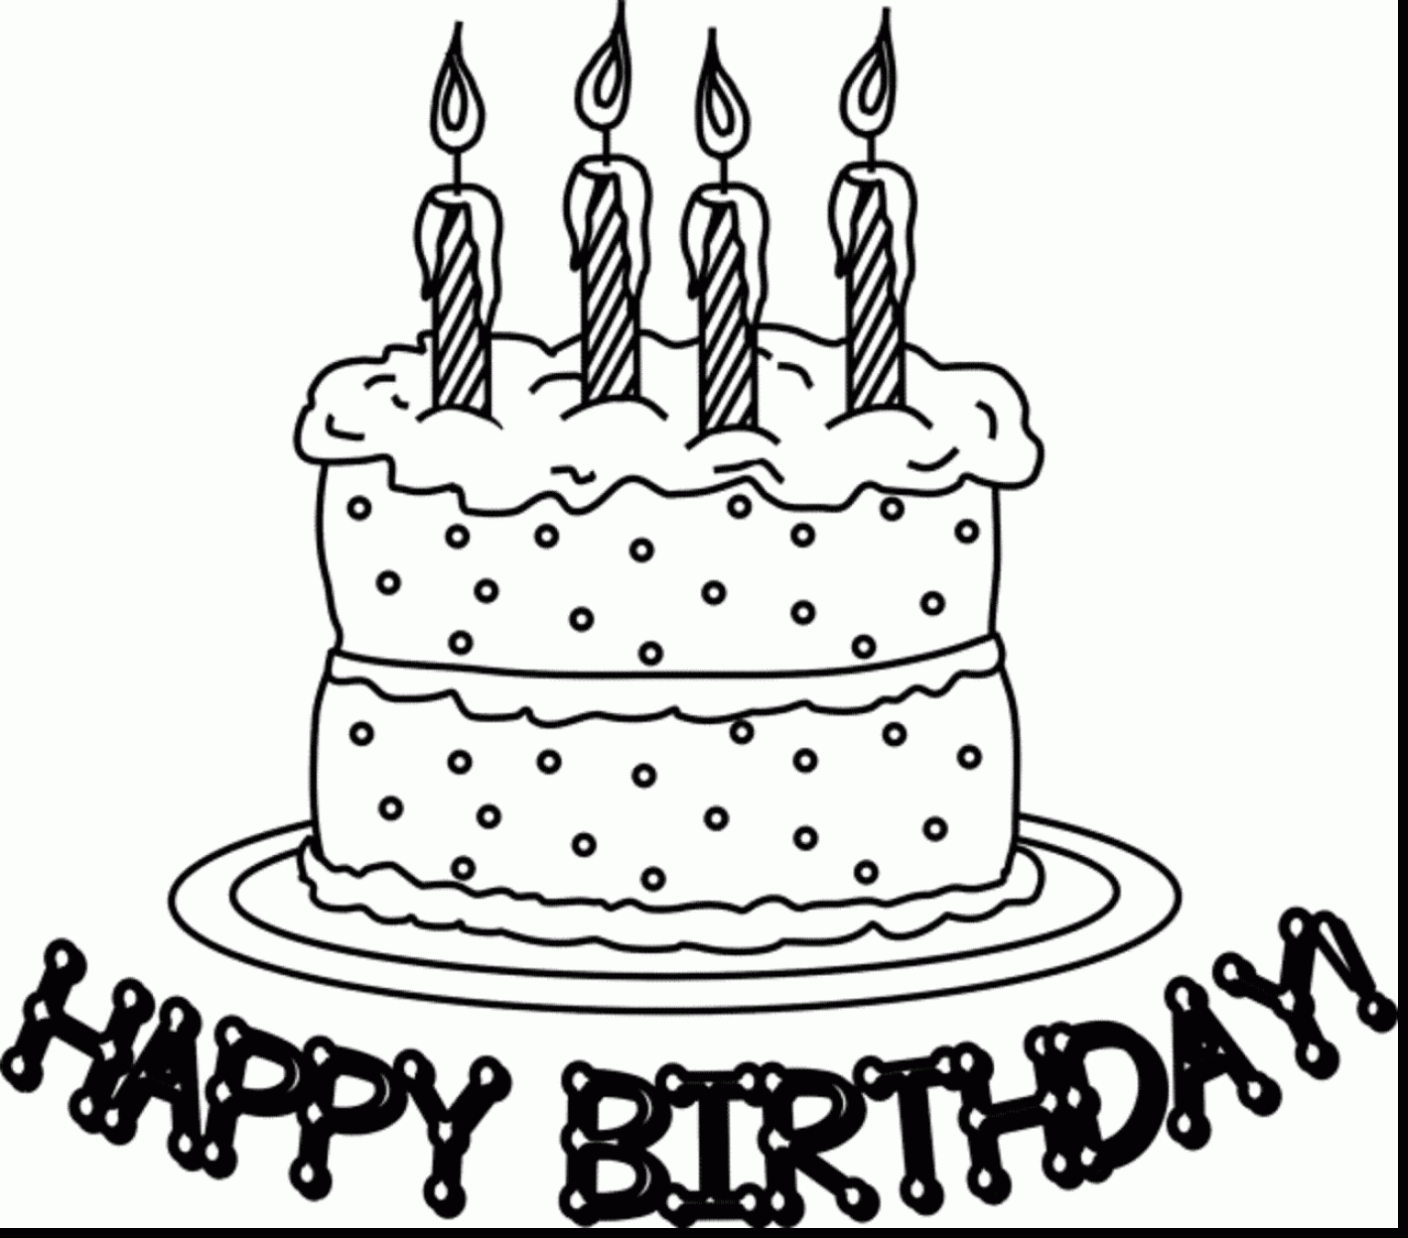 Free Birthday Cake Clip Art Black And White, Download Free Birthday